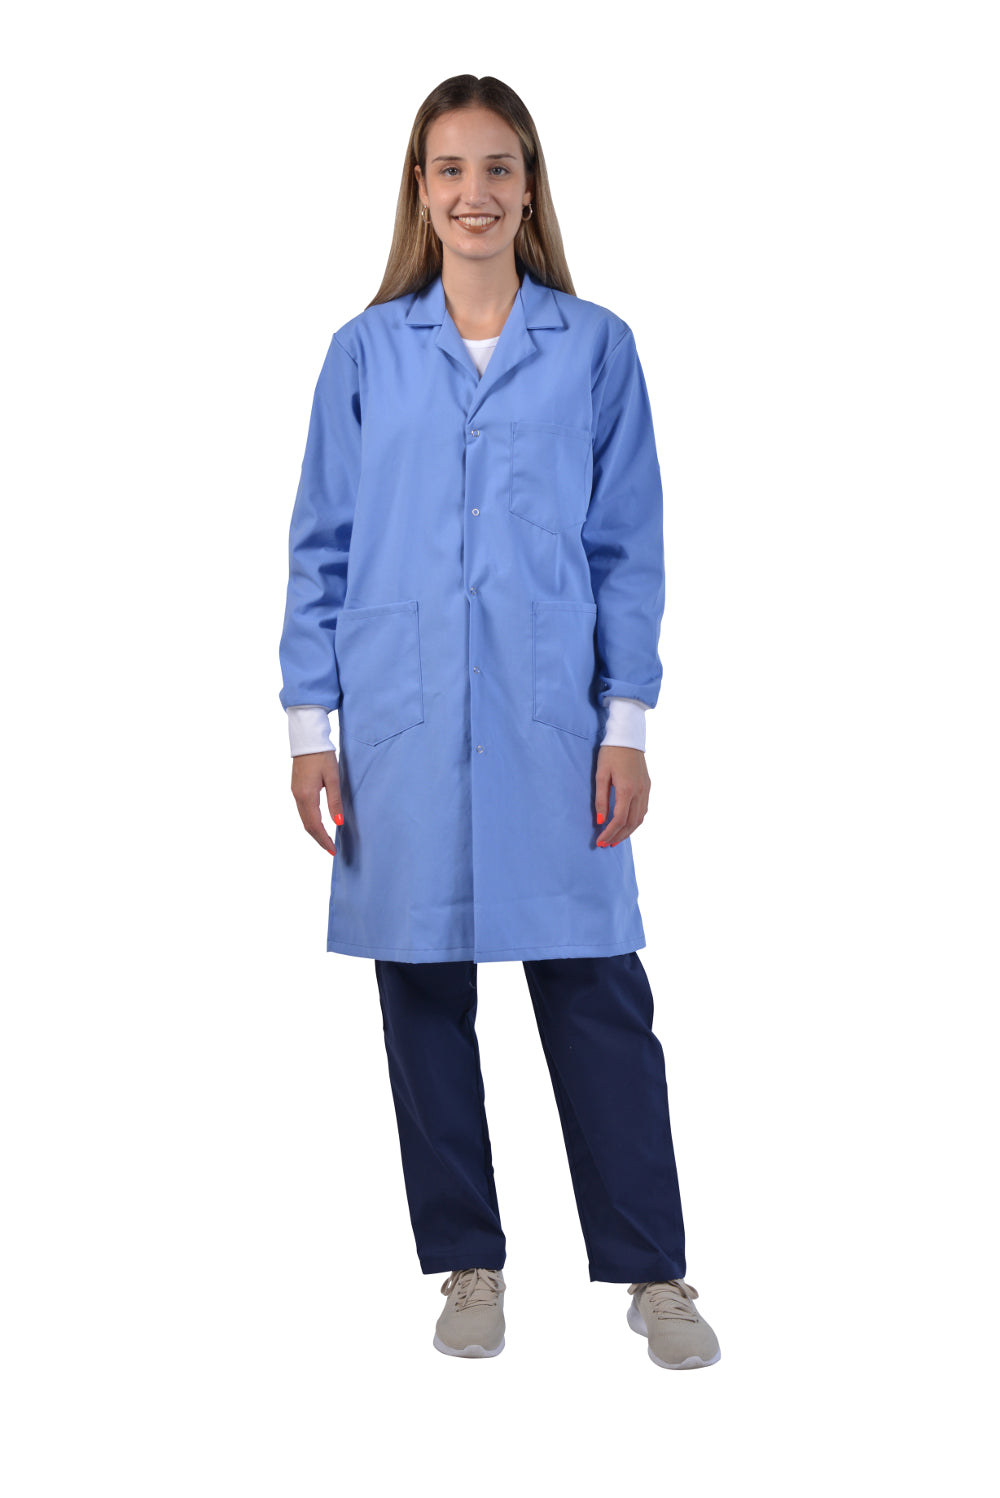 Ciel Blue - Avida Lab Coats 42" Unisex Lab Coat with Knit Cuffs (AAMI Level I Fabric)